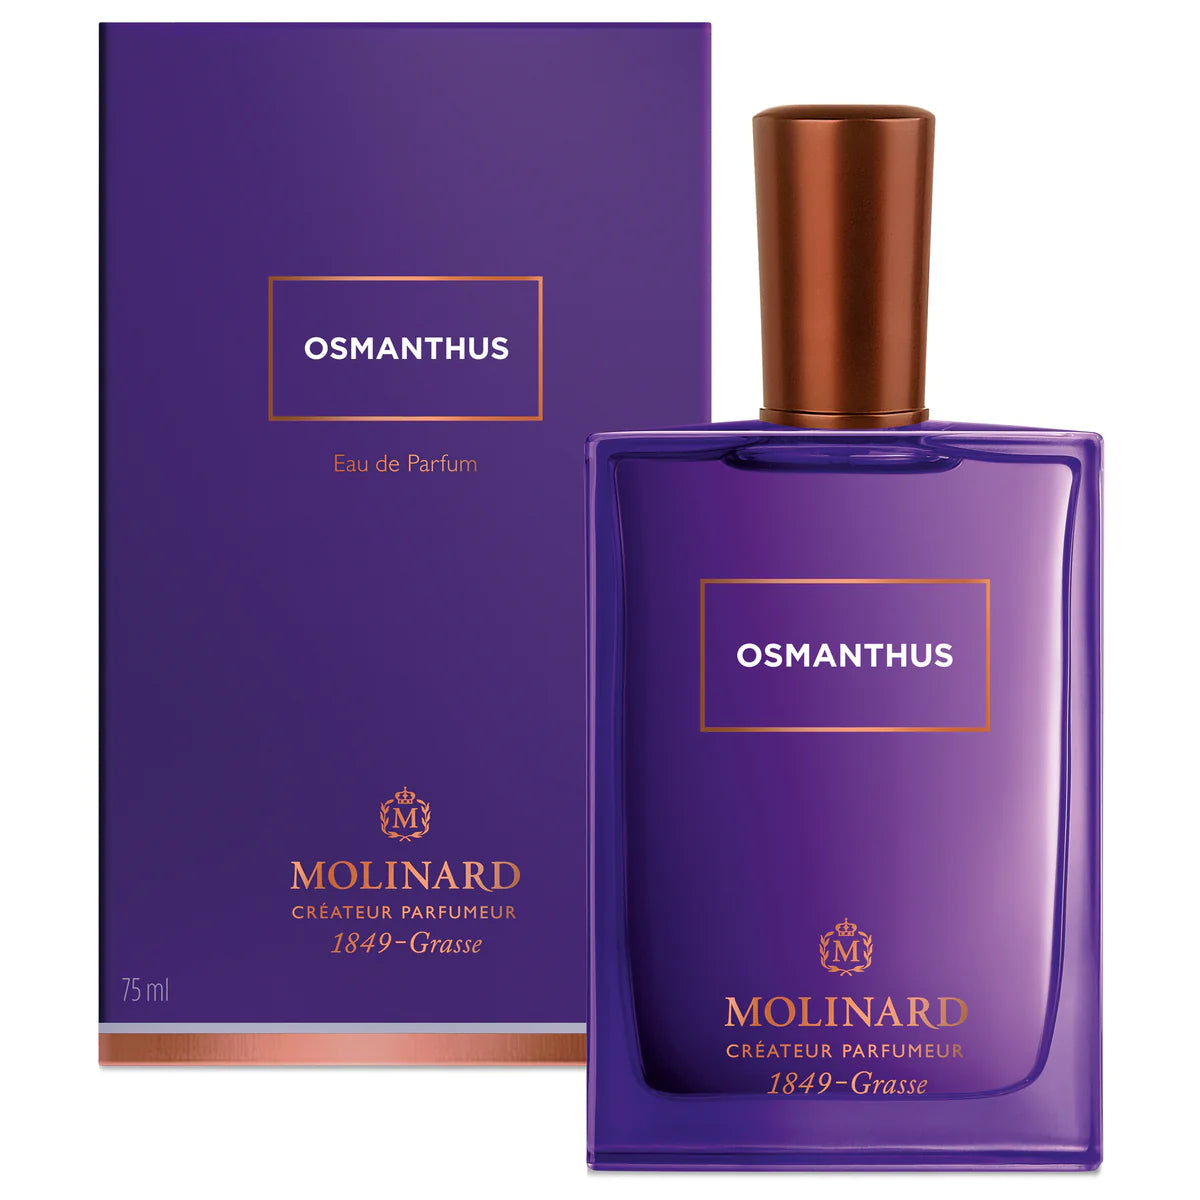 Osmanthus Eau de Parfum - 75 ML - Molinard